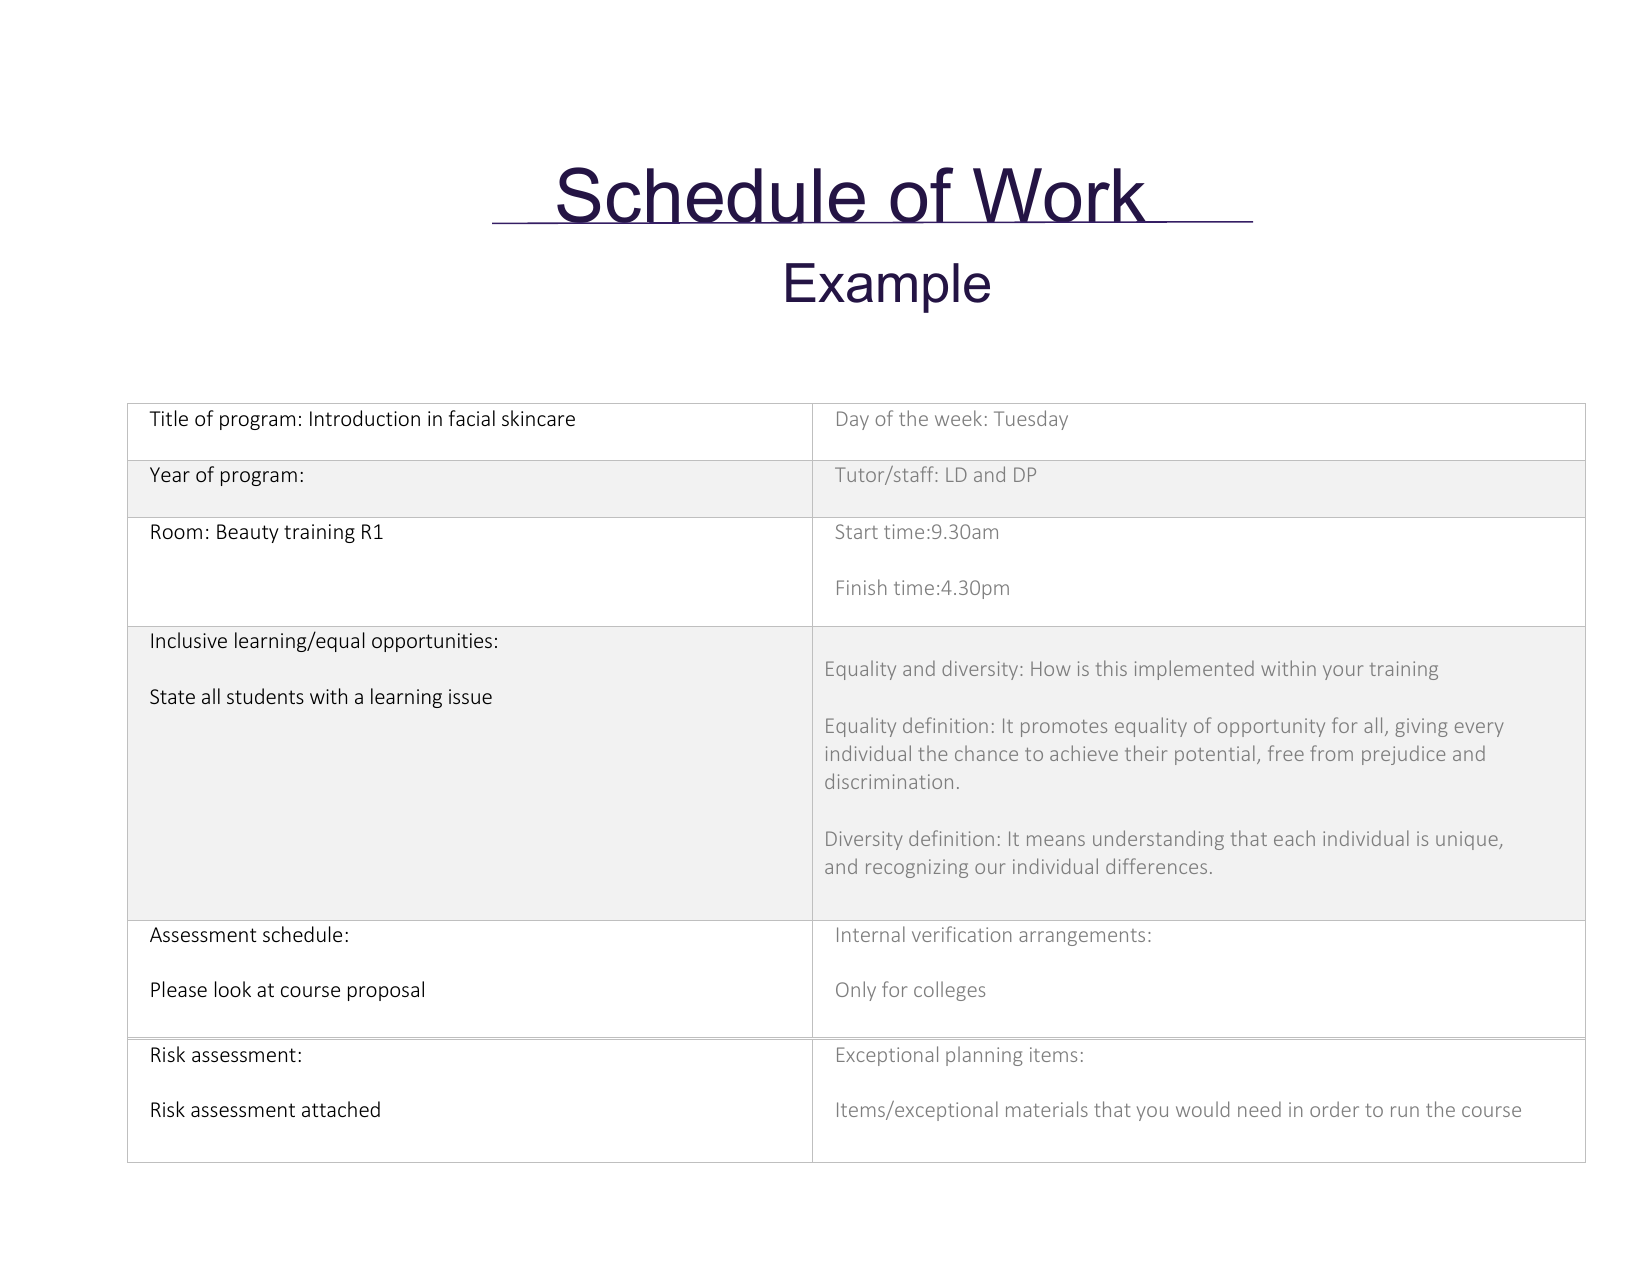 Scheme of Work 2016 - Example